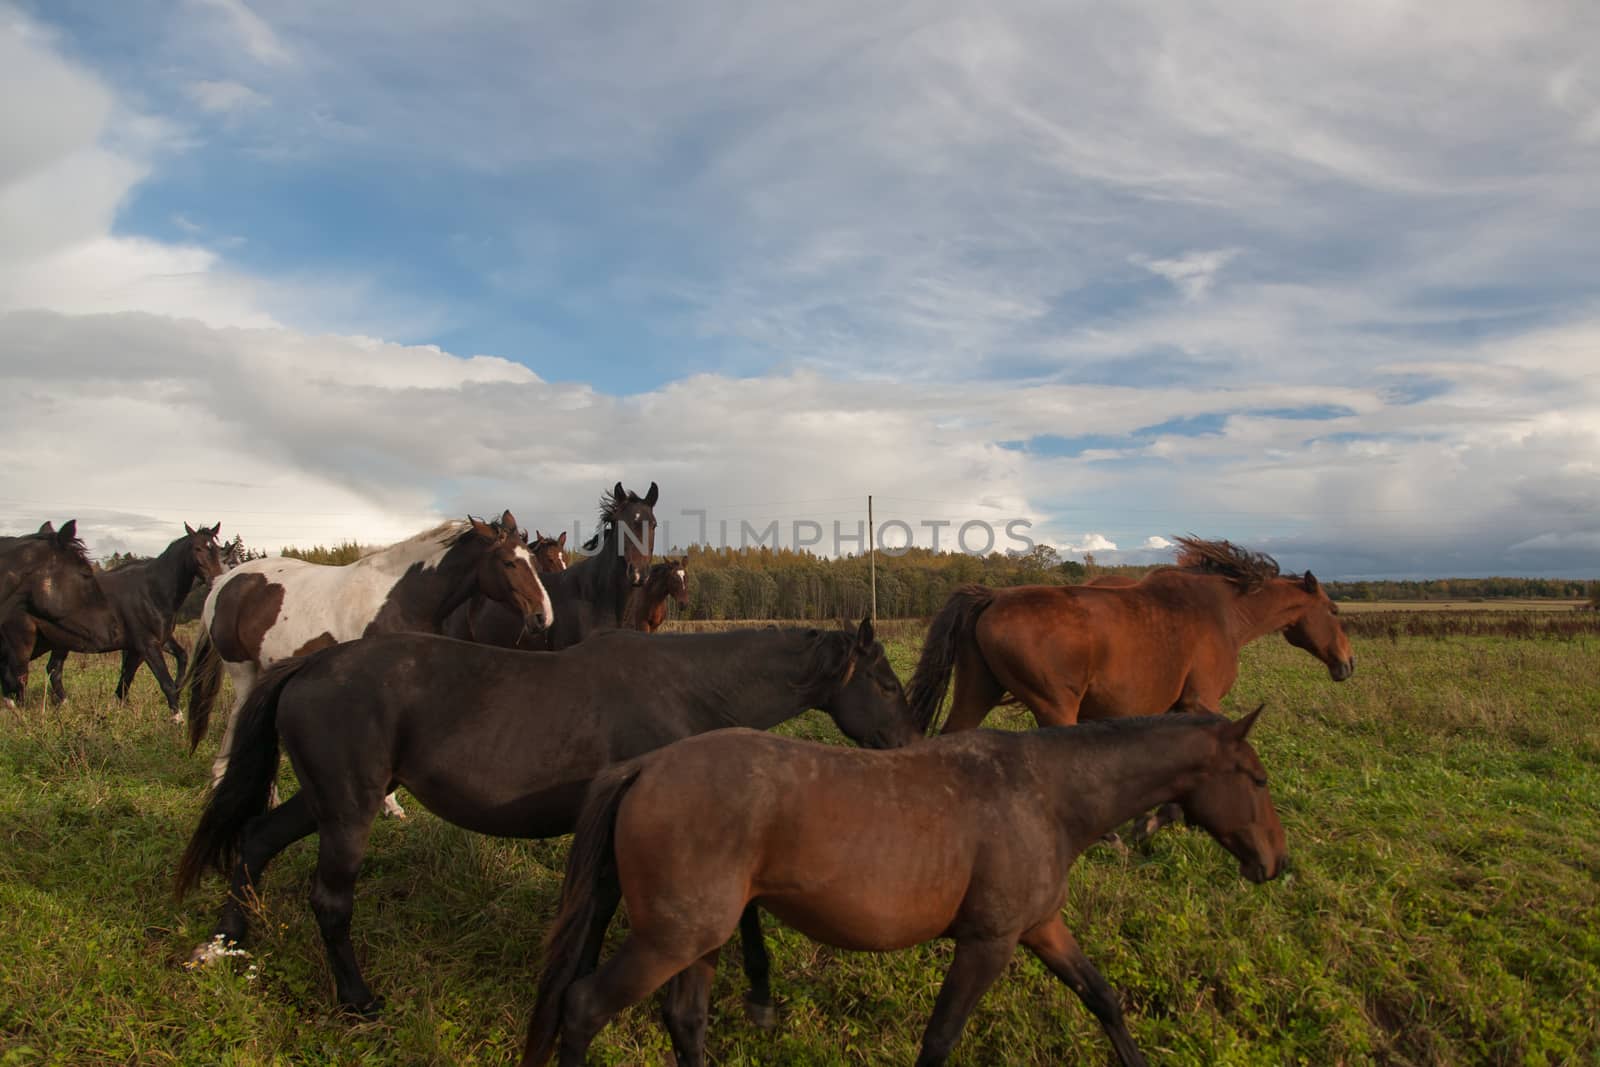 Horses in Field by desant7474